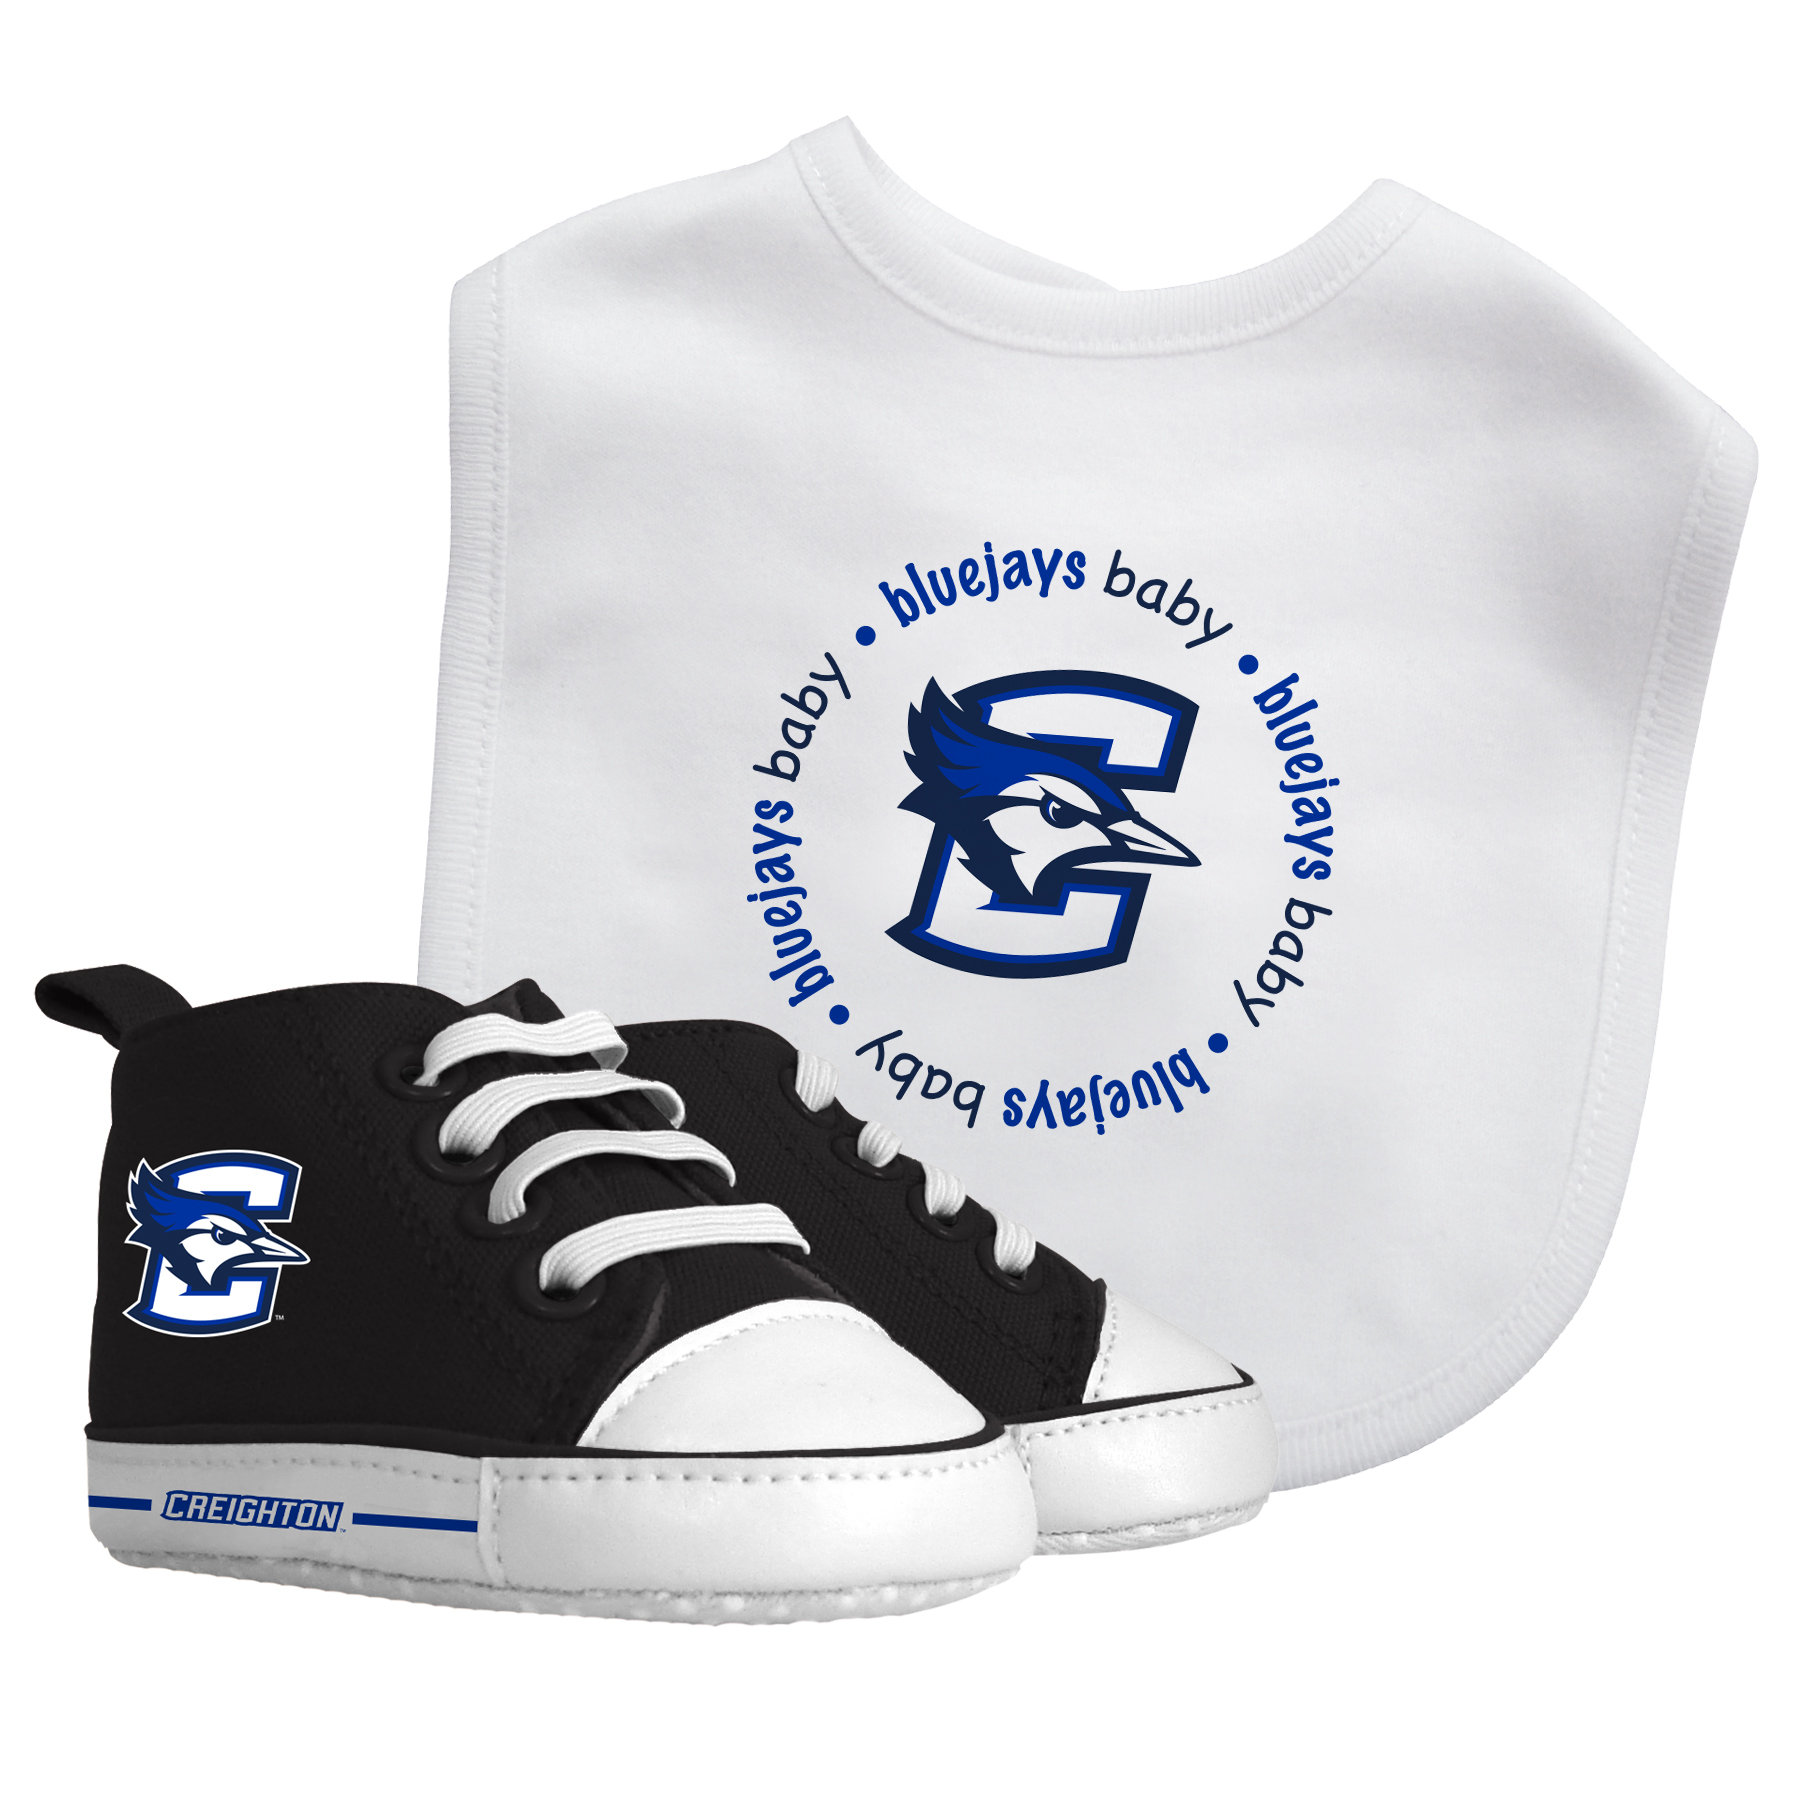 BabyFanatic 2 Piece Bib and Shoes - NCAA Creighton - White Unisex Infant Apparel - image 1 of 3